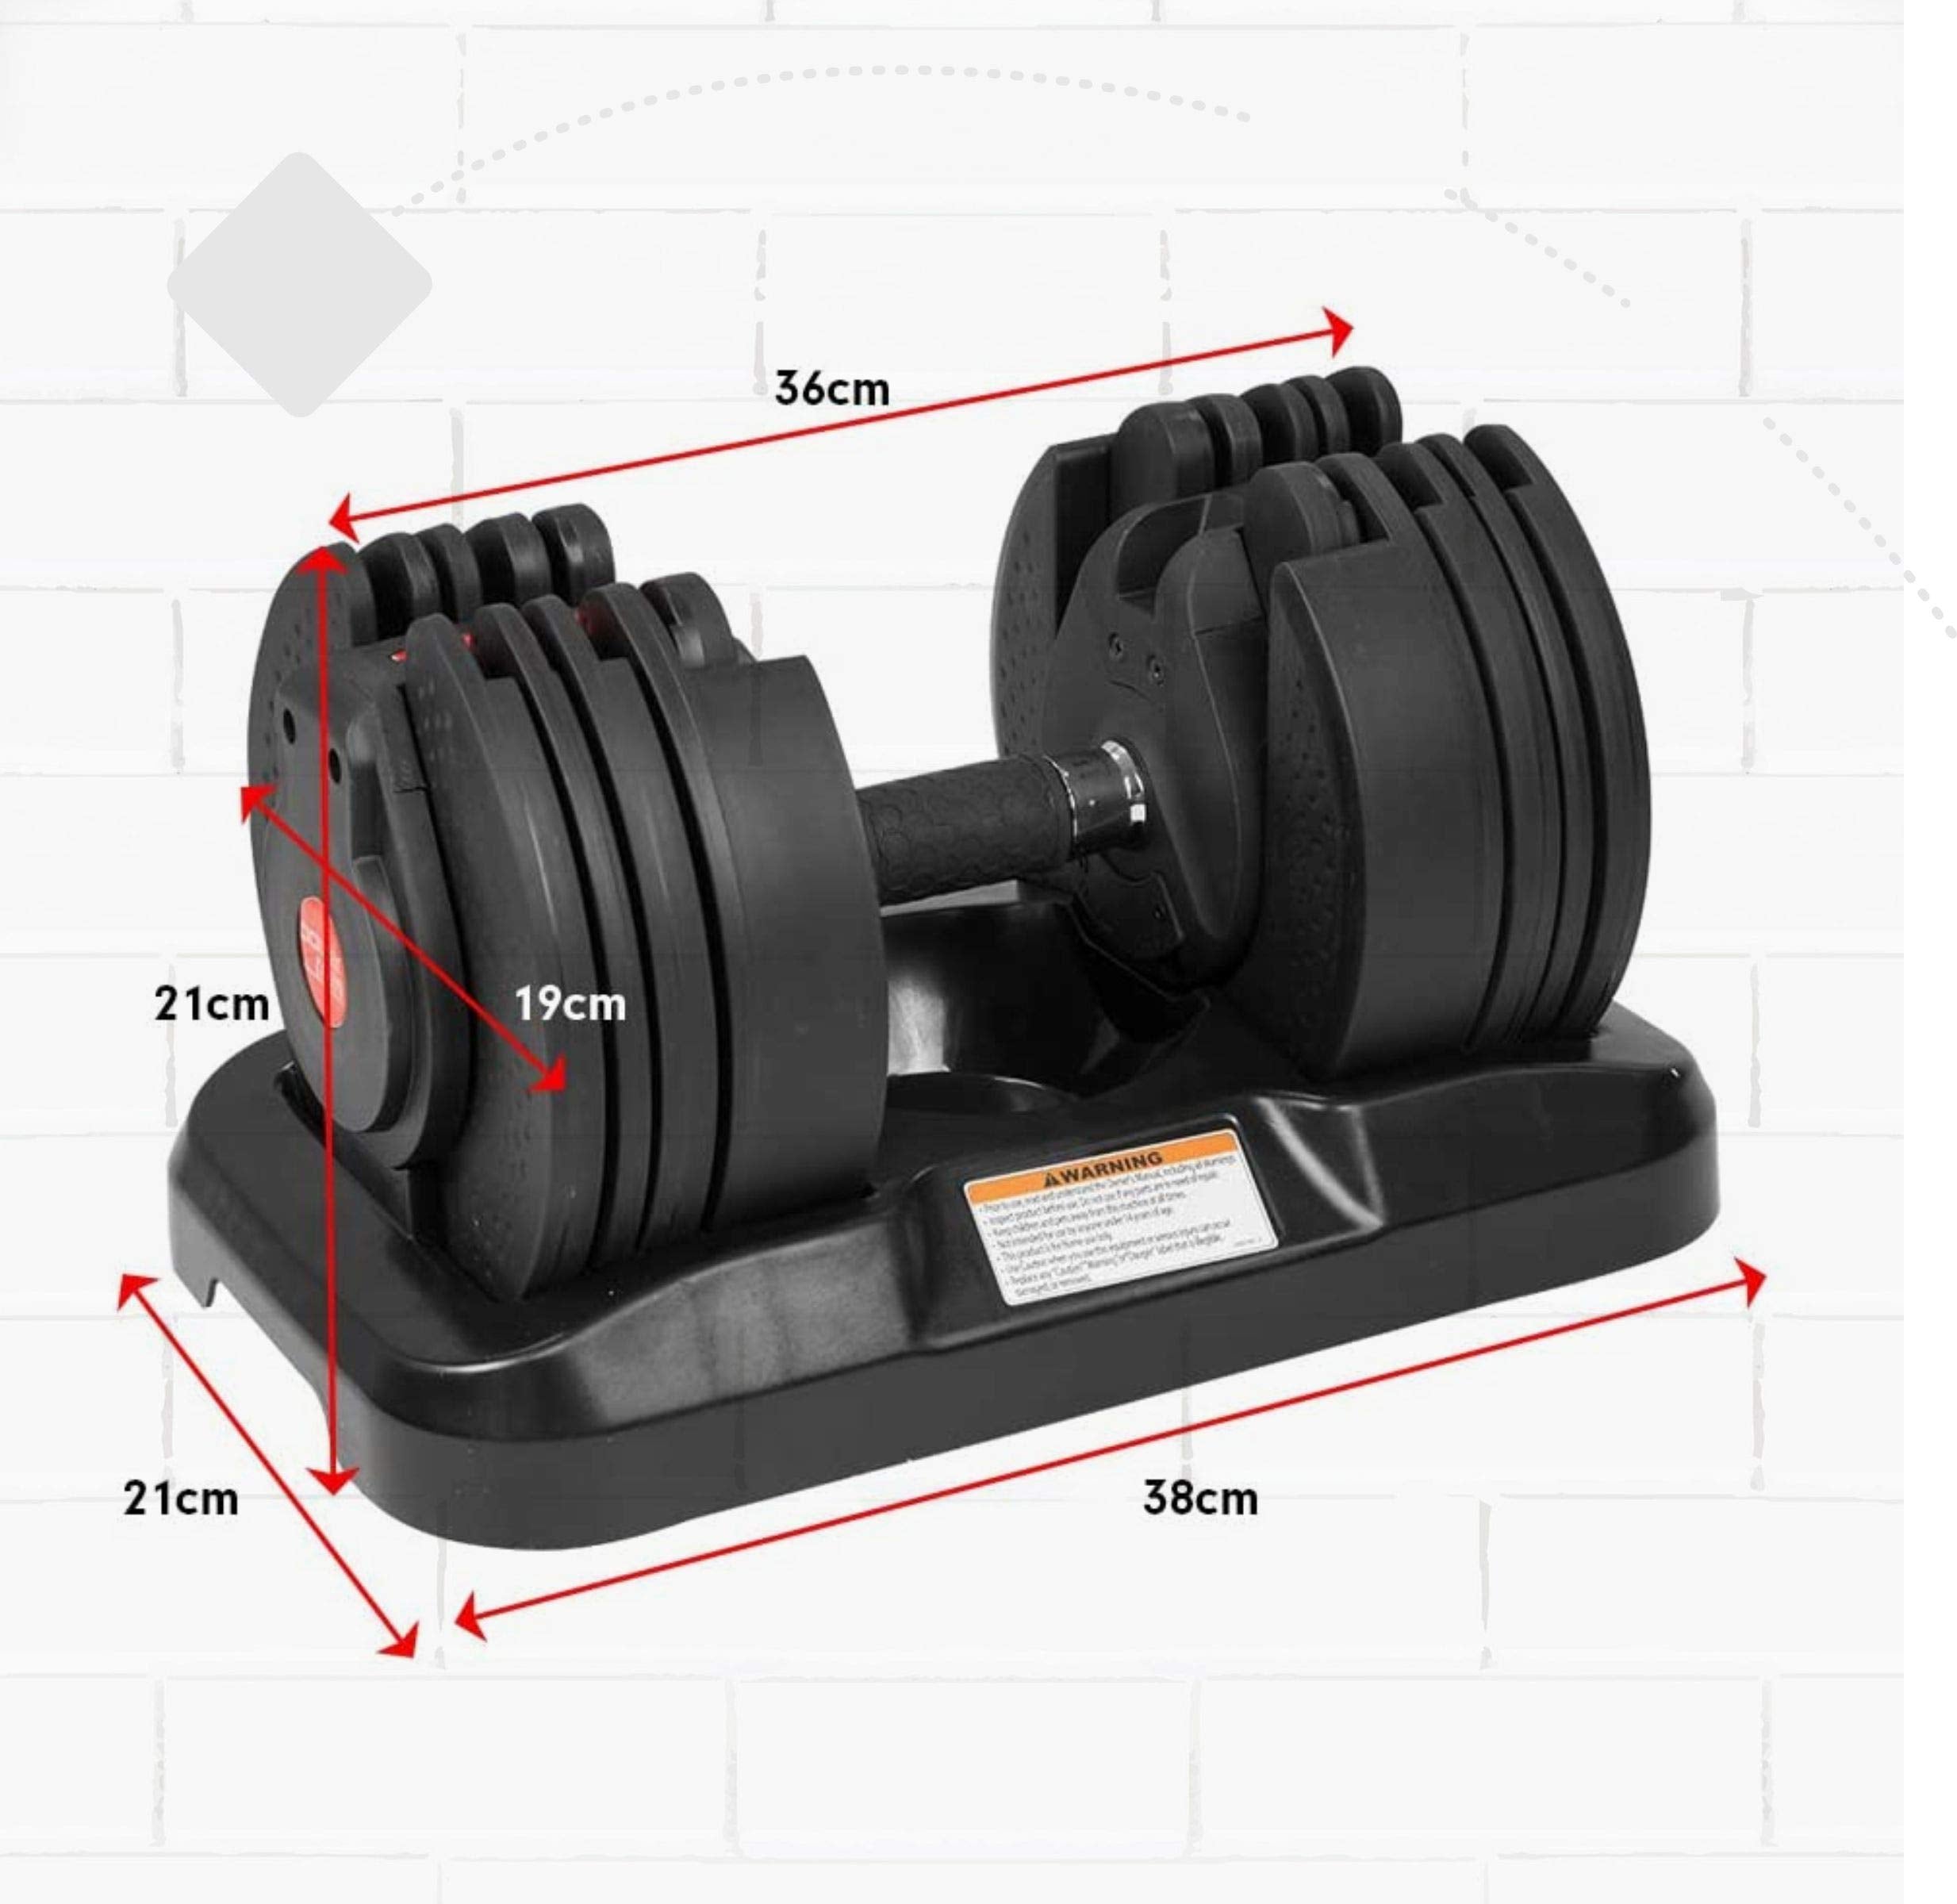 Buy Reach Power 20 Adjustable Dumbbells (3Kg to 20Kg) for Home Use